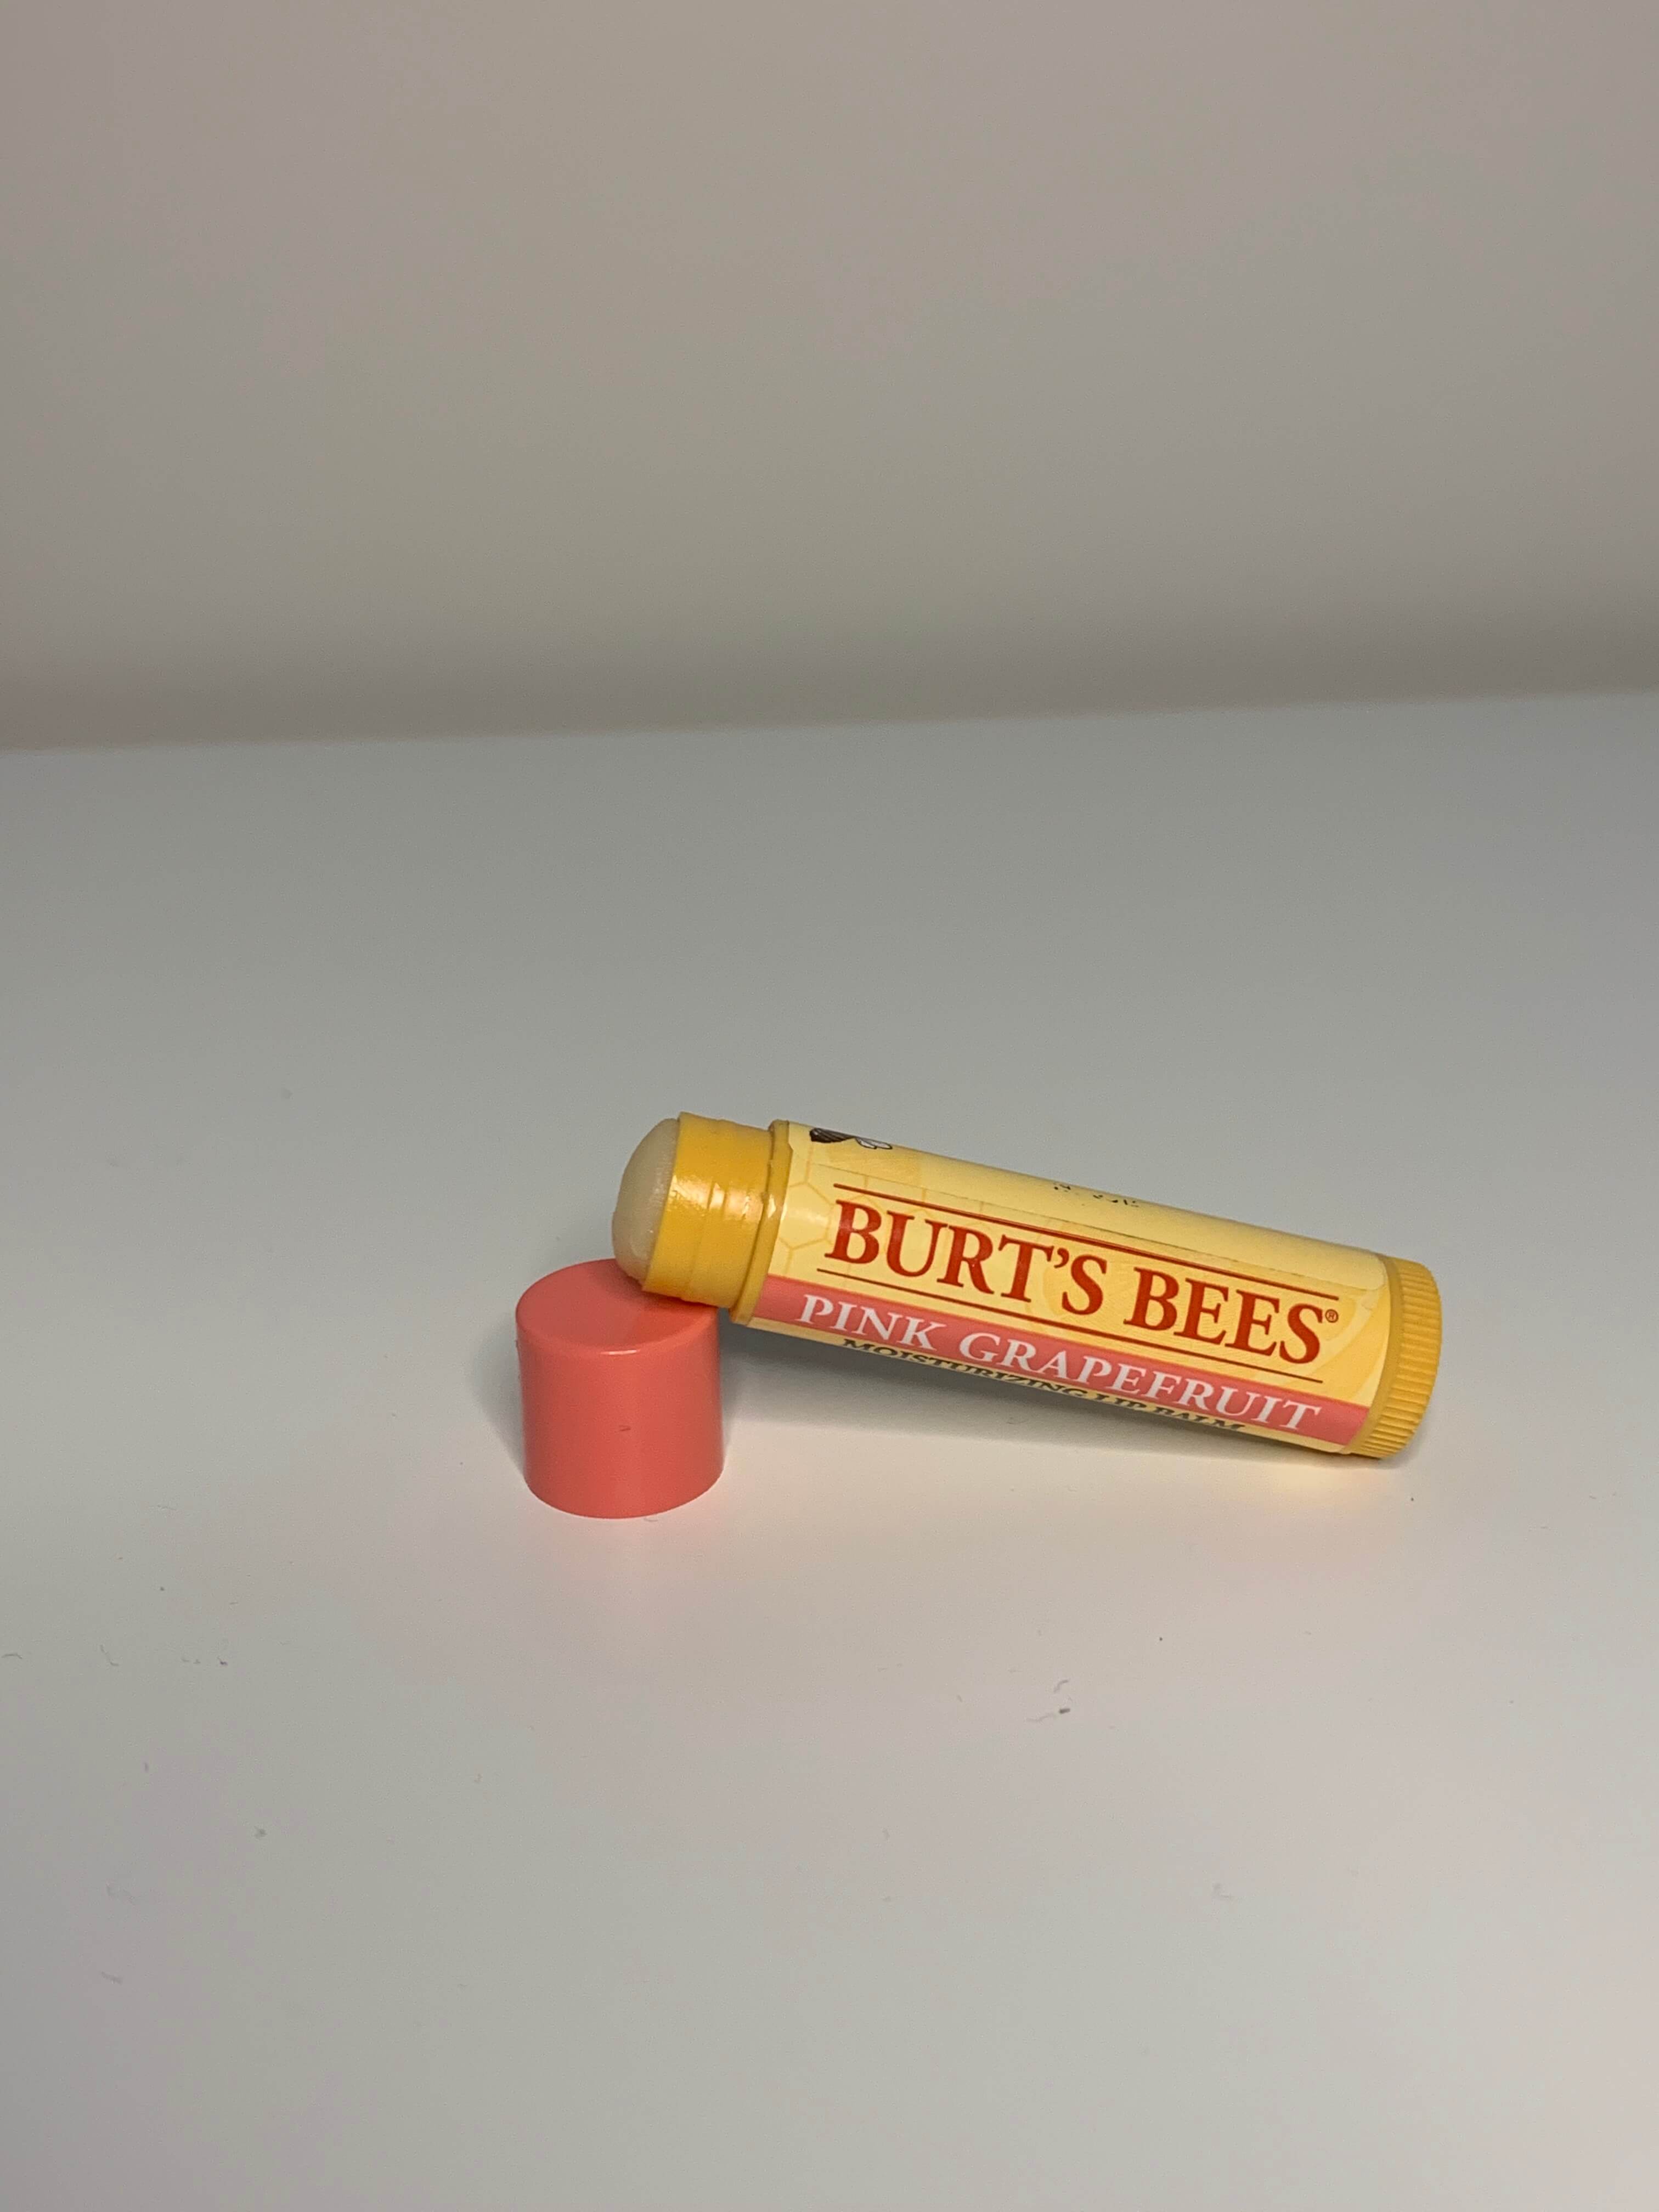 Burt's Bees lip balm